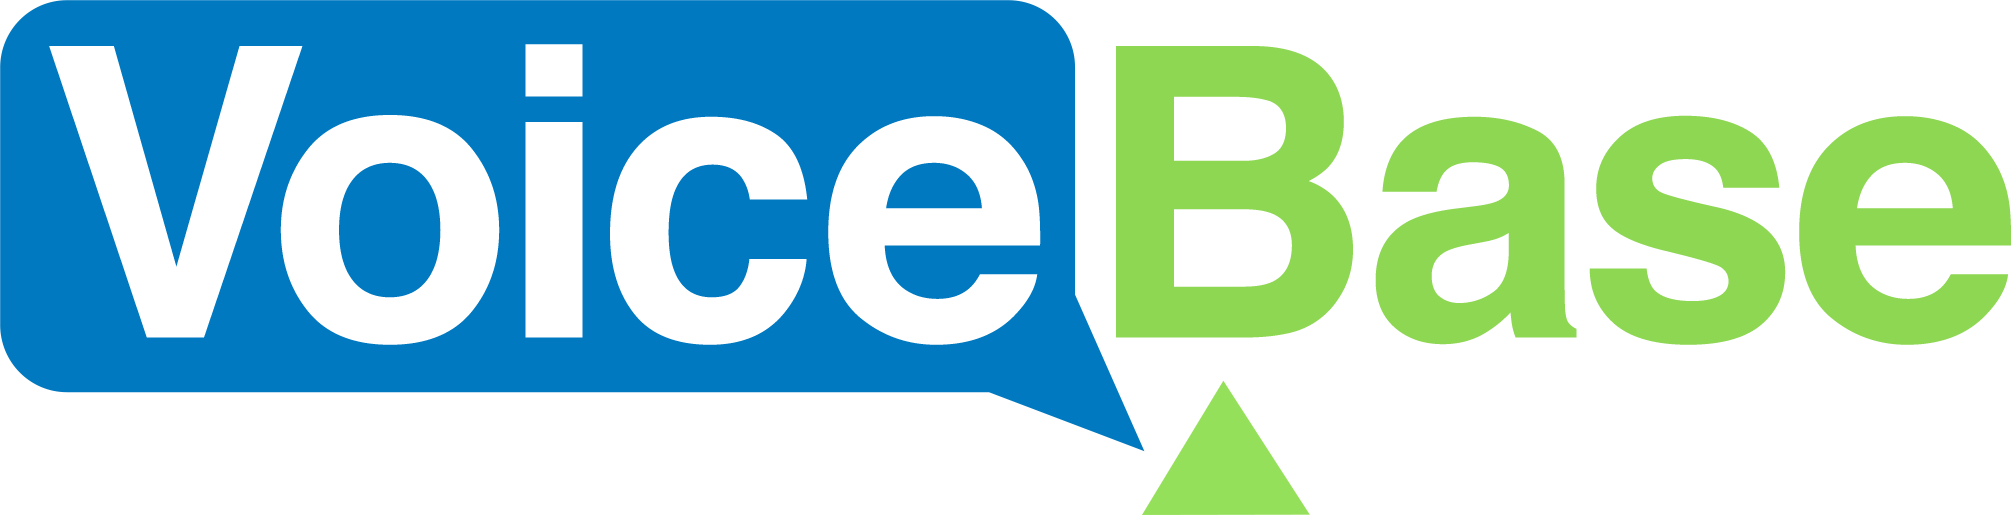 voicebase-logo-2-2